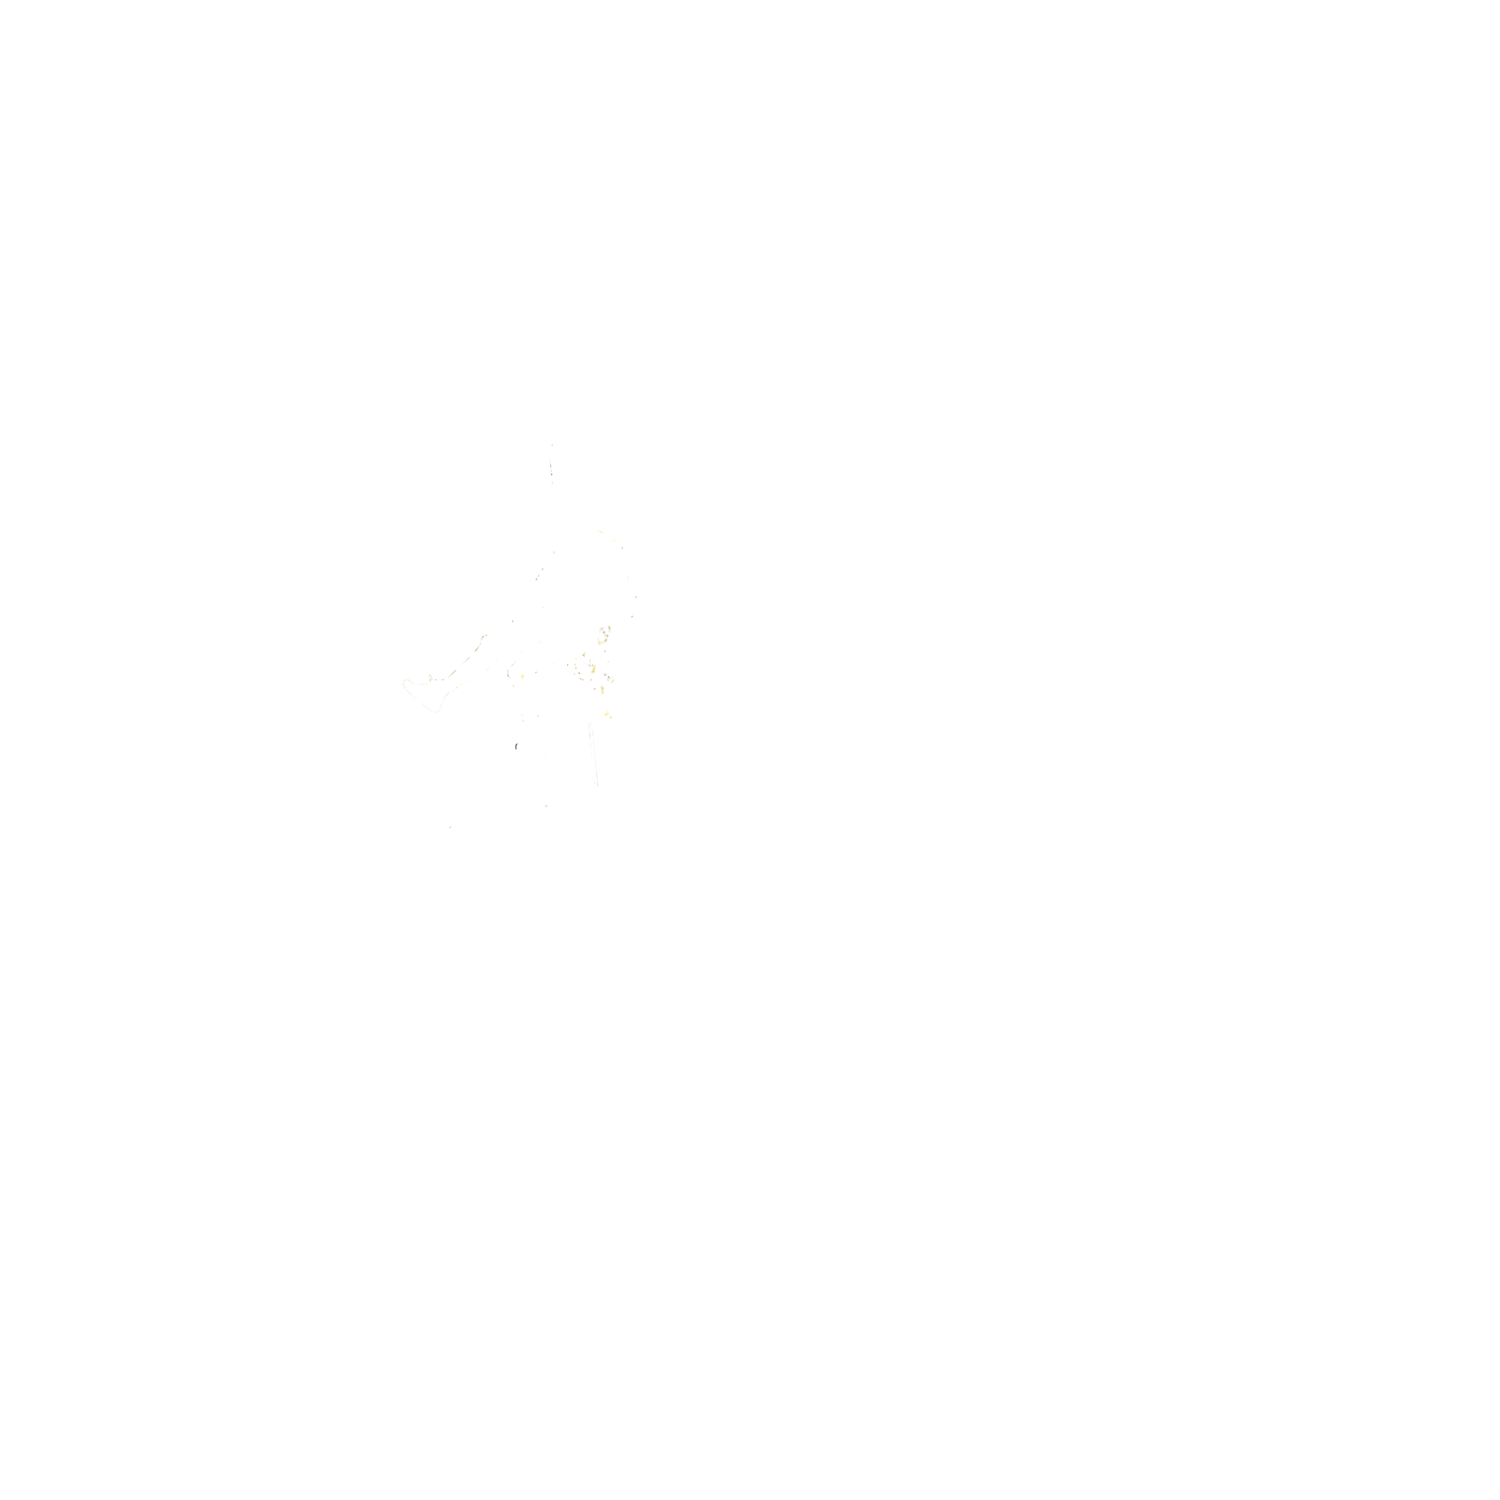 Neil Cox Misadventures